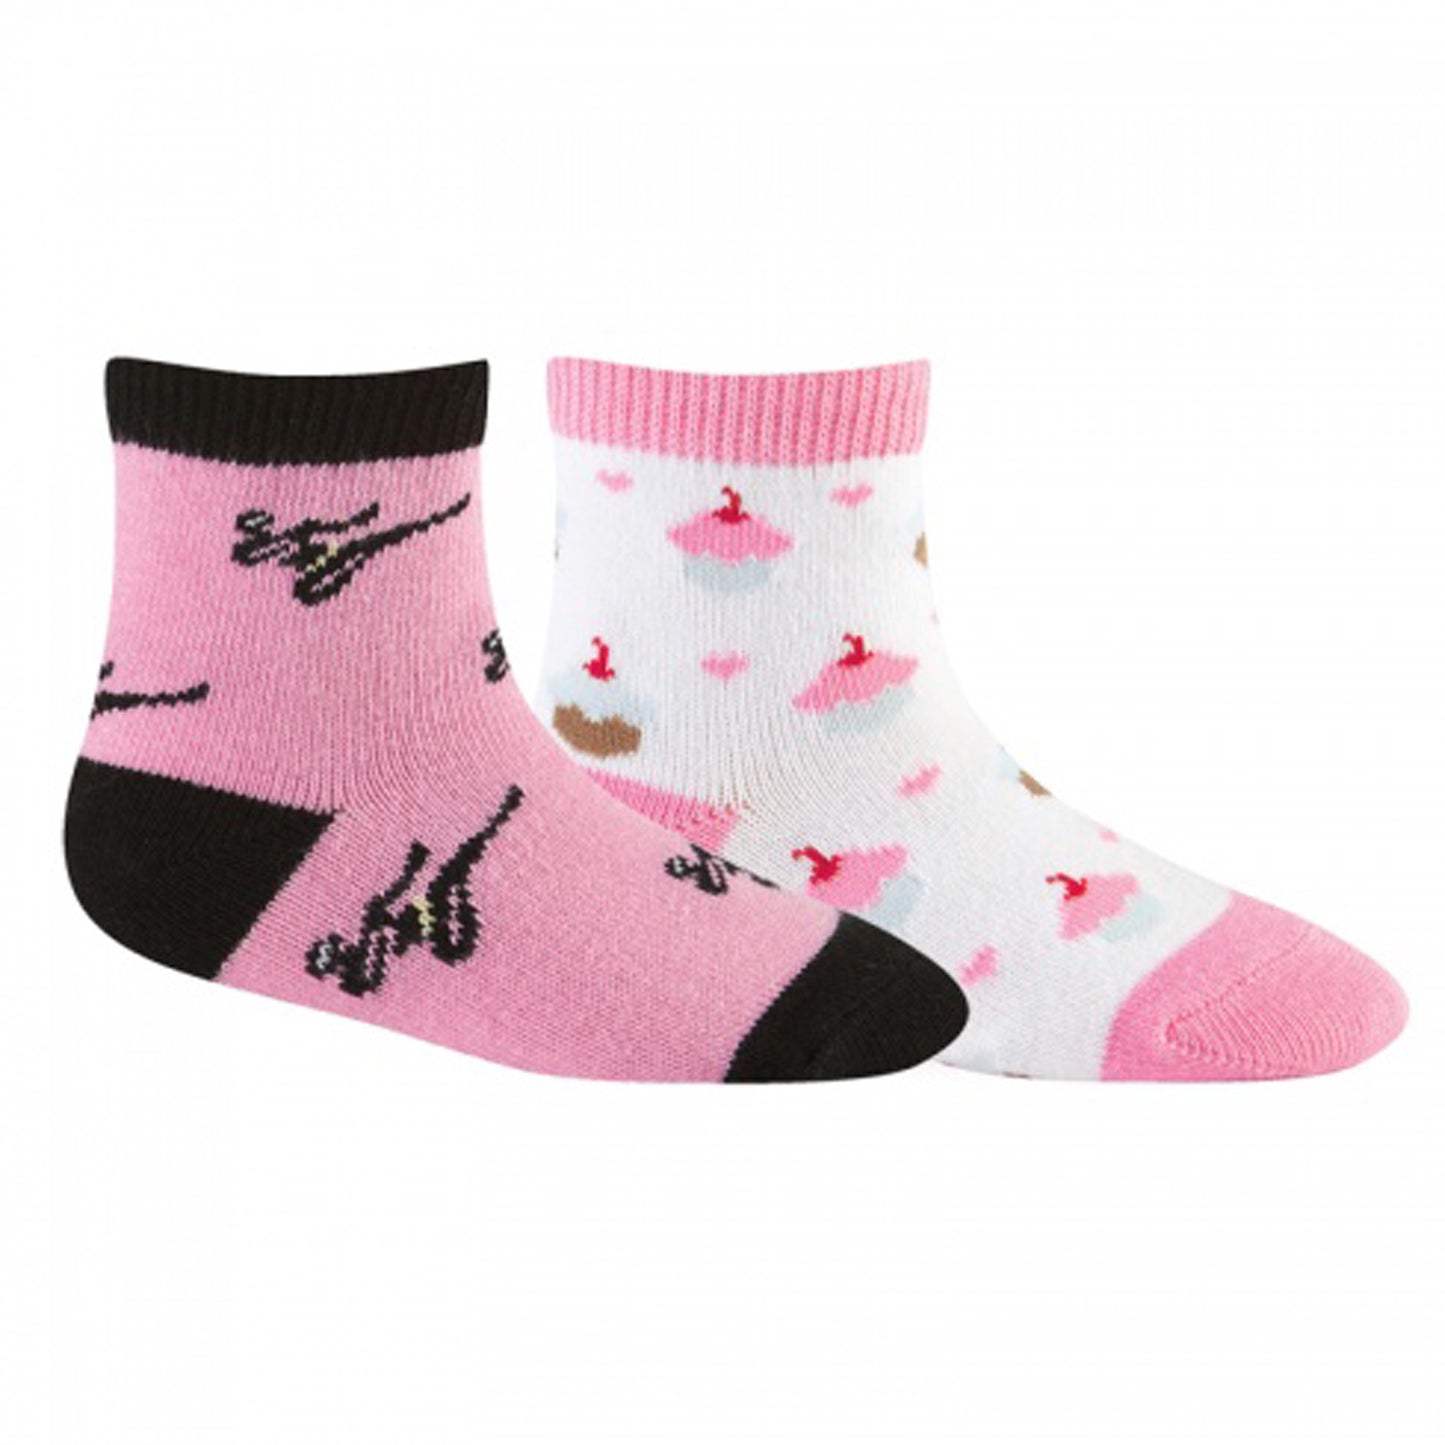 Sock It To Me Girls Socks Twin Pack - Pink Ninja & Cupcake (2-4 Years Old)